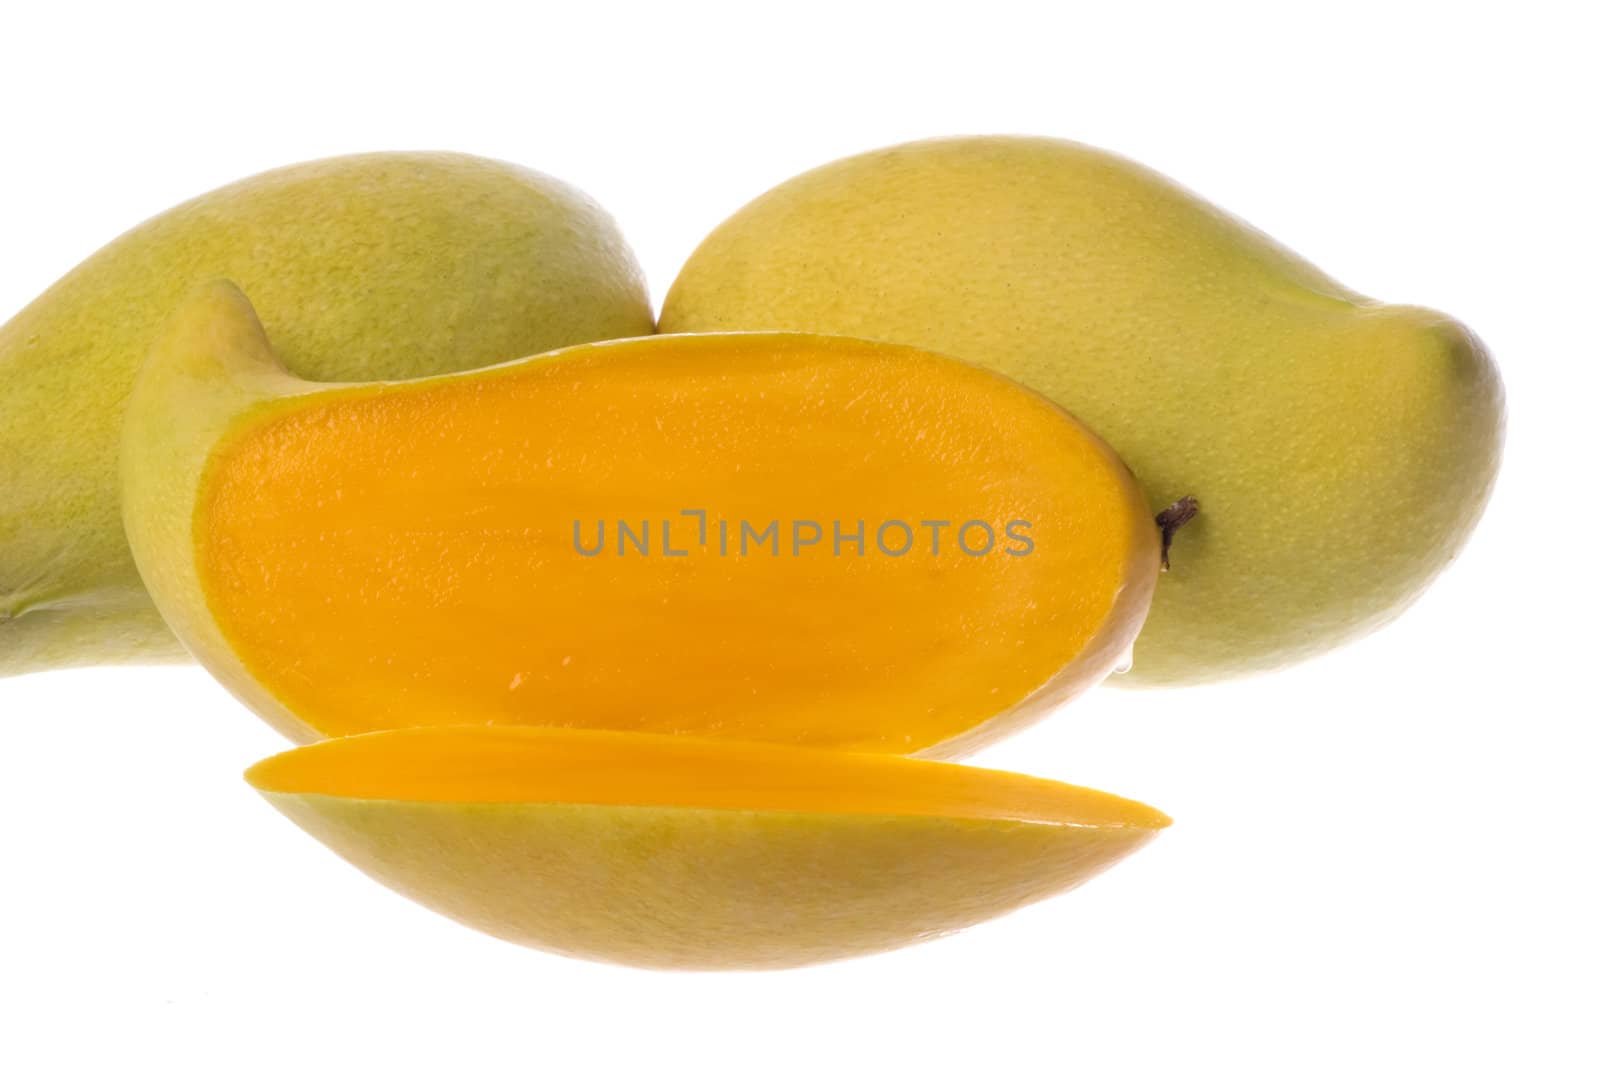 Isolated macro image of Waterlily Mangoes.